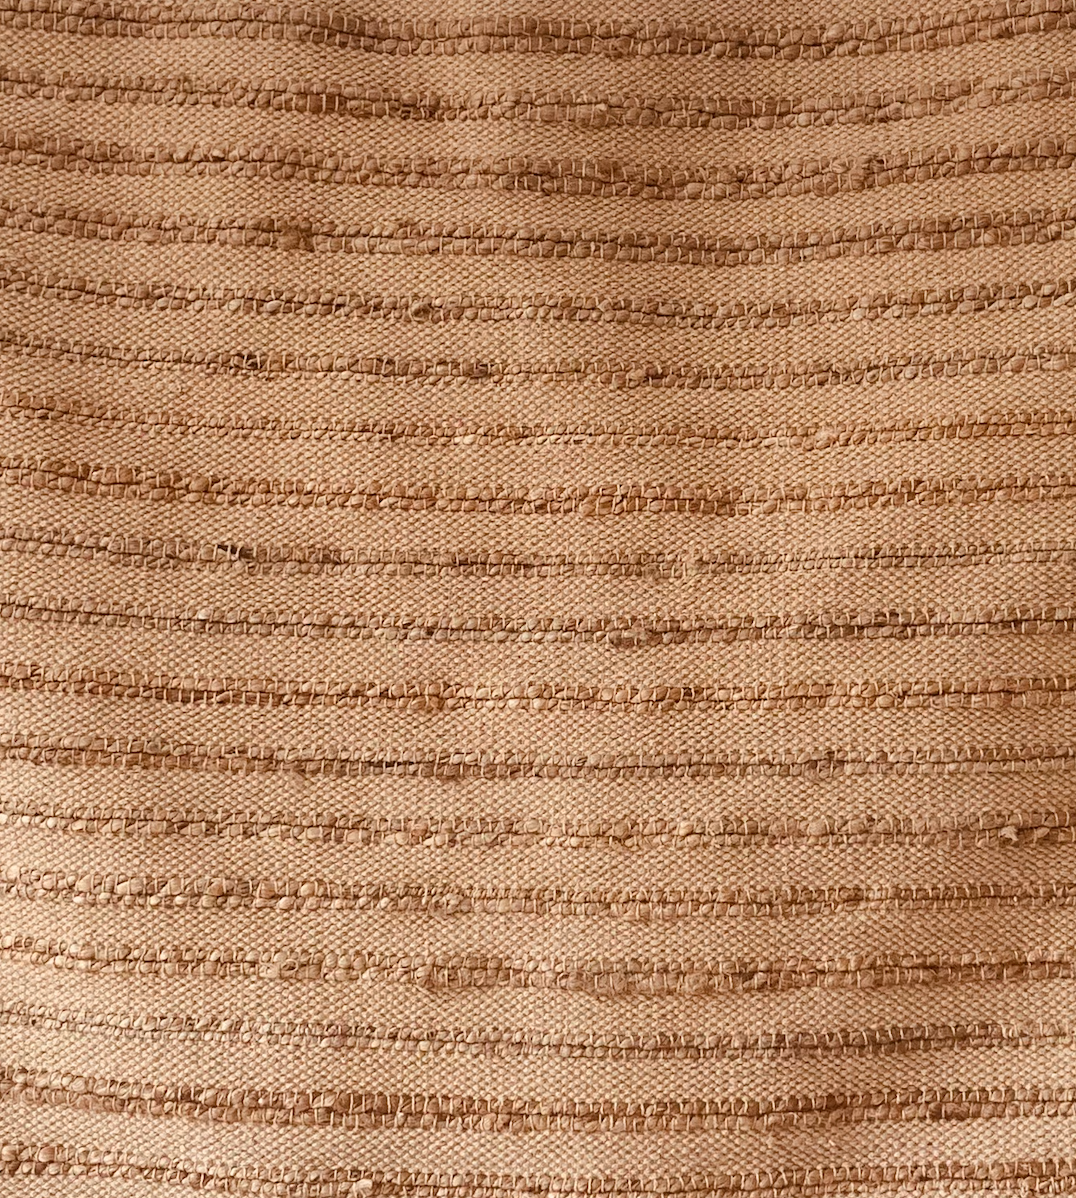 Cotton with Jute stripe textured jute rug 5 x 8 ft. ( 150 X 240 cms)